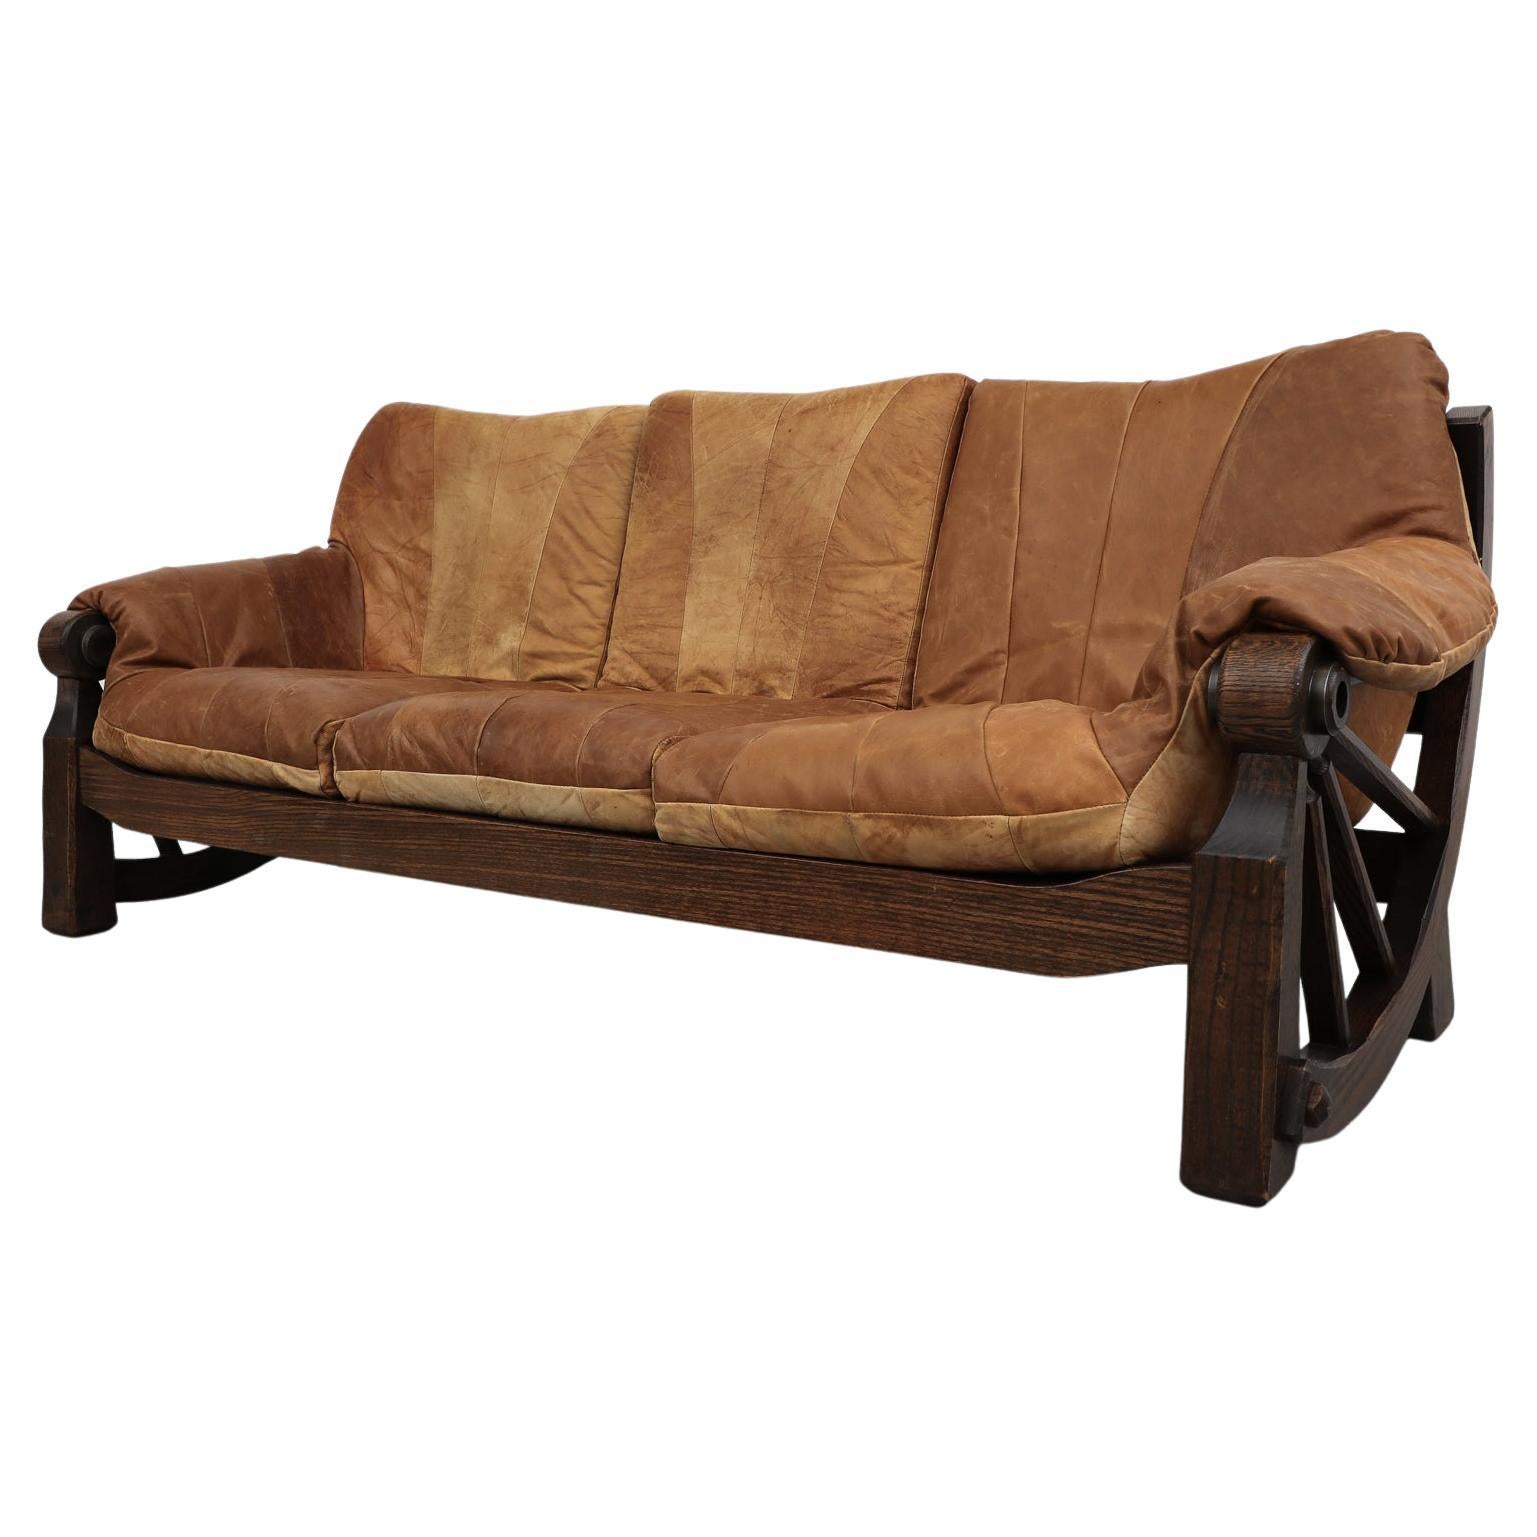 Wood Frame Leather Sofa